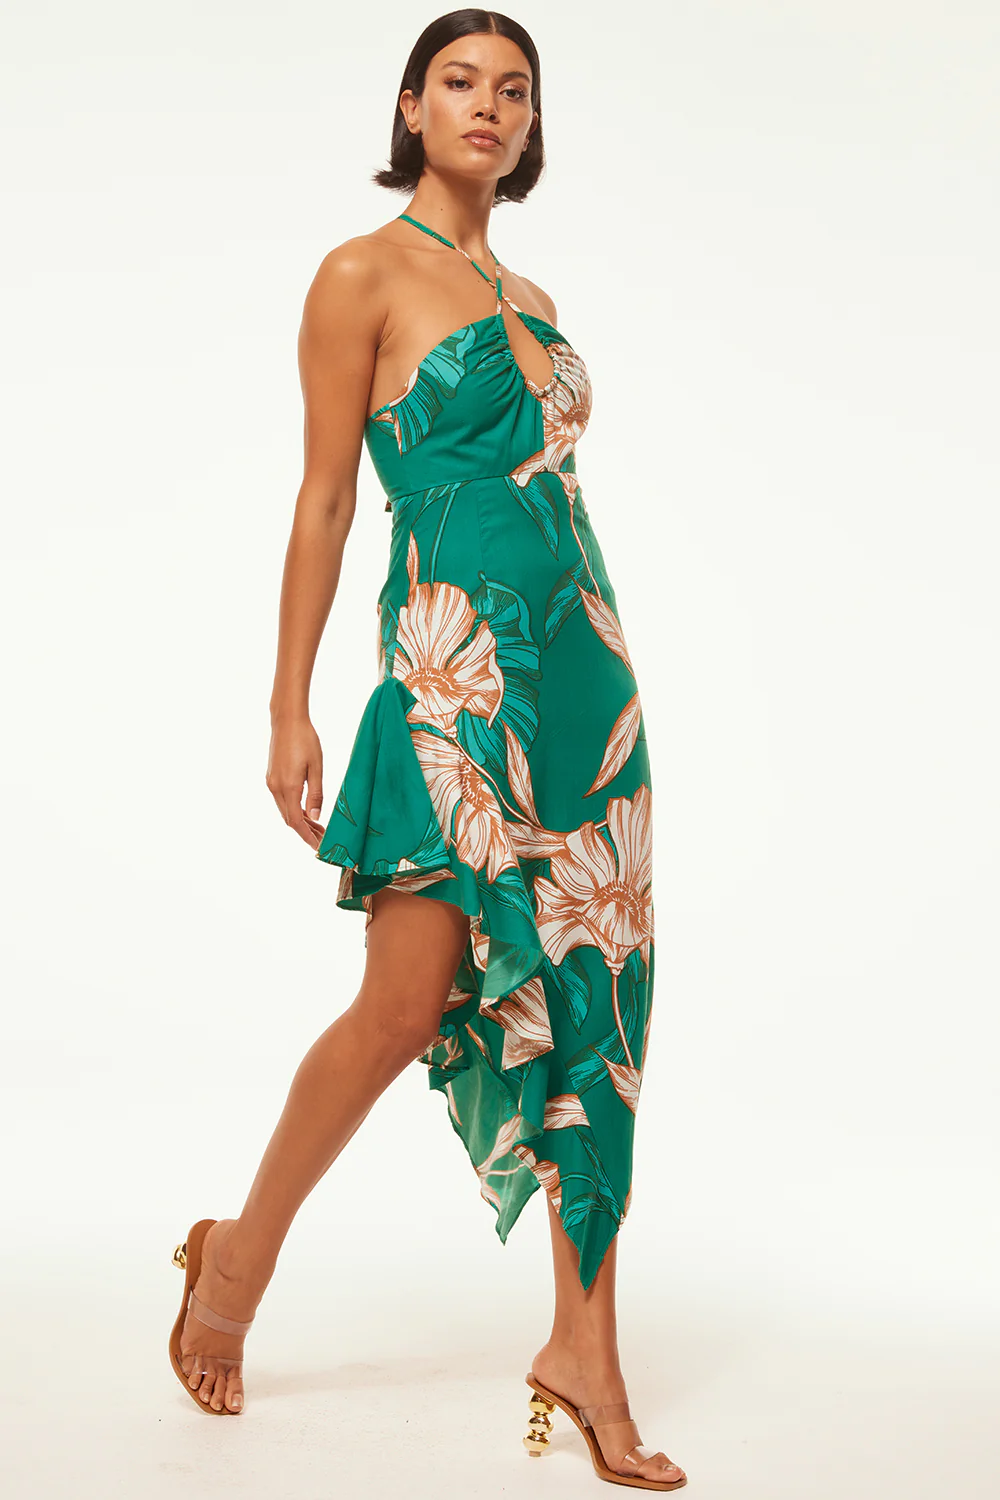 Misa Valeria Dress - Size S Available